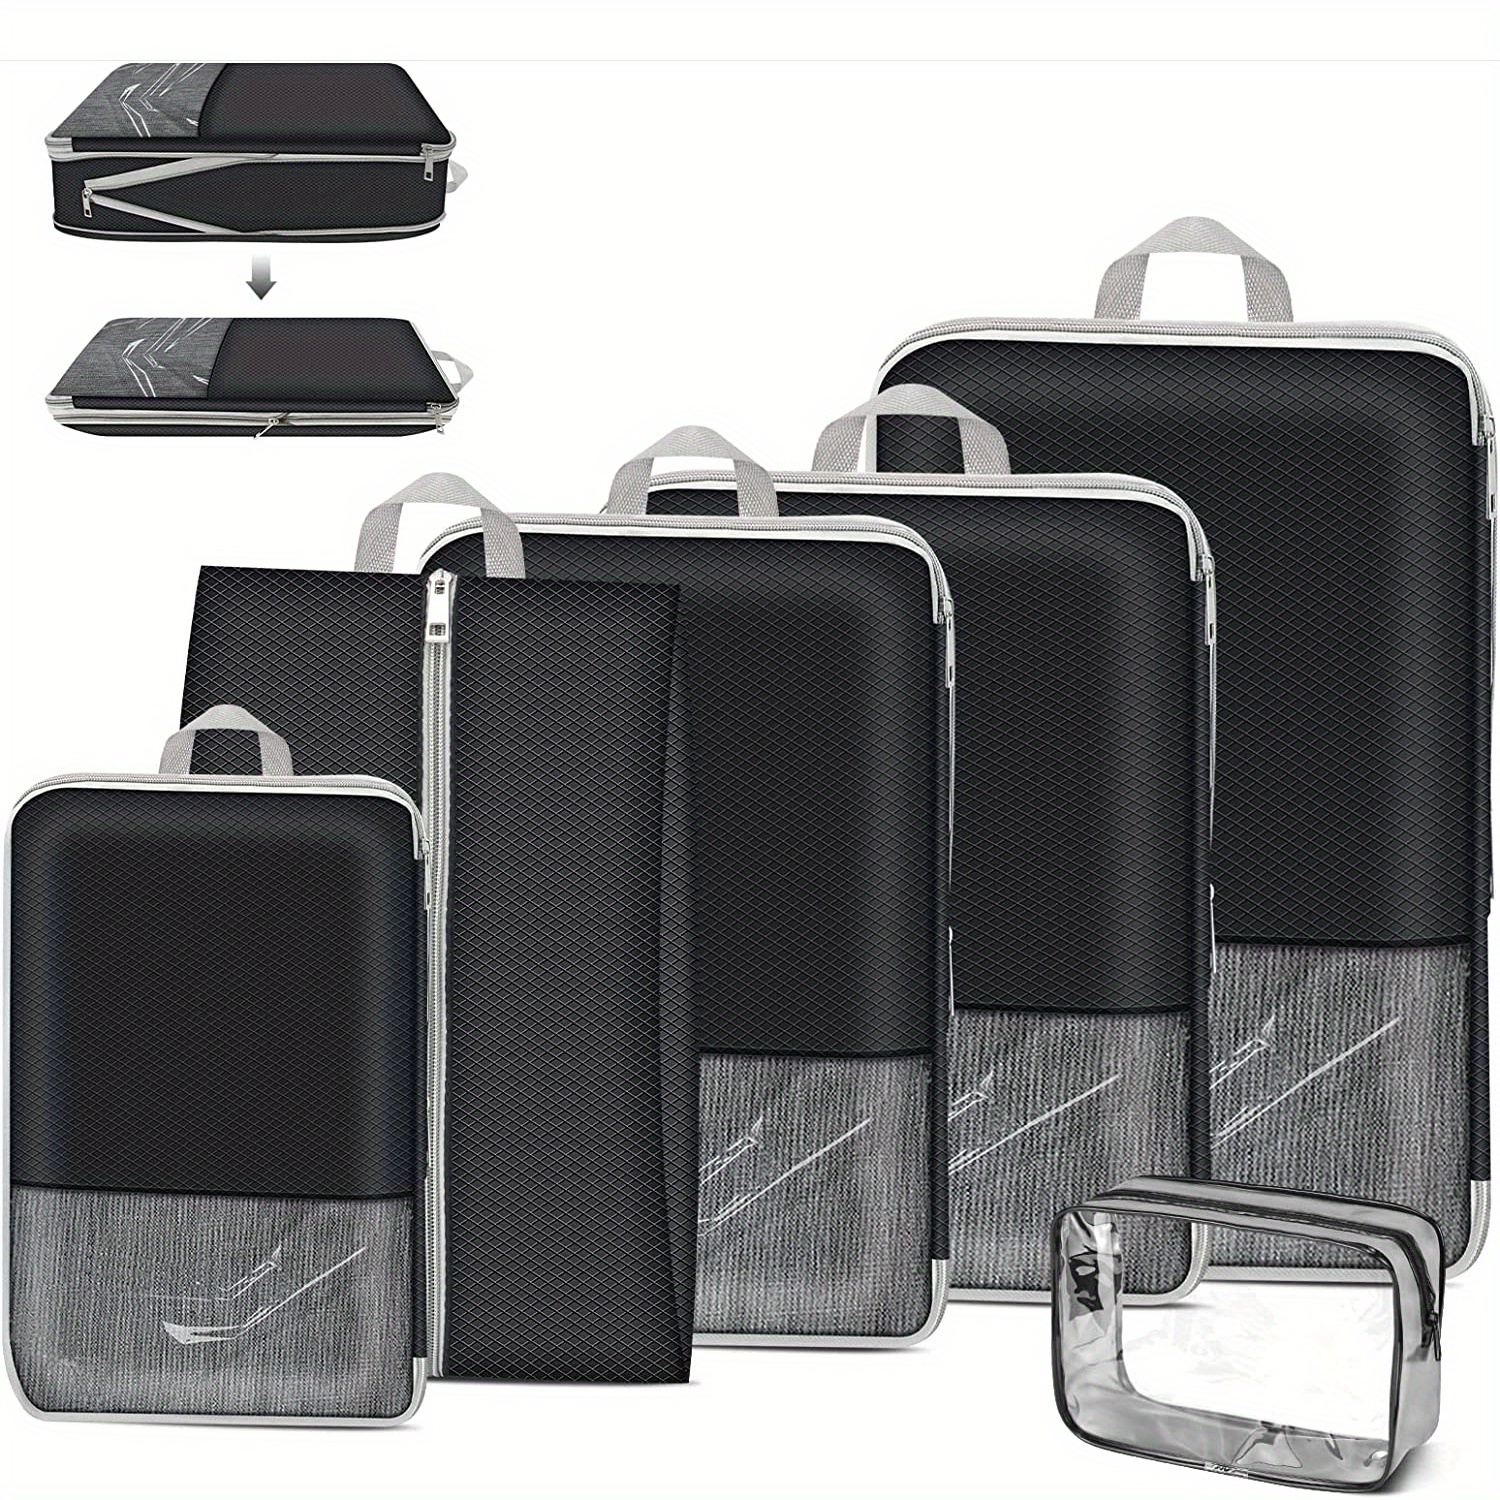 6pcs Travel Packing Cubes Clothes Storage Bag Travel Pouch Shoes